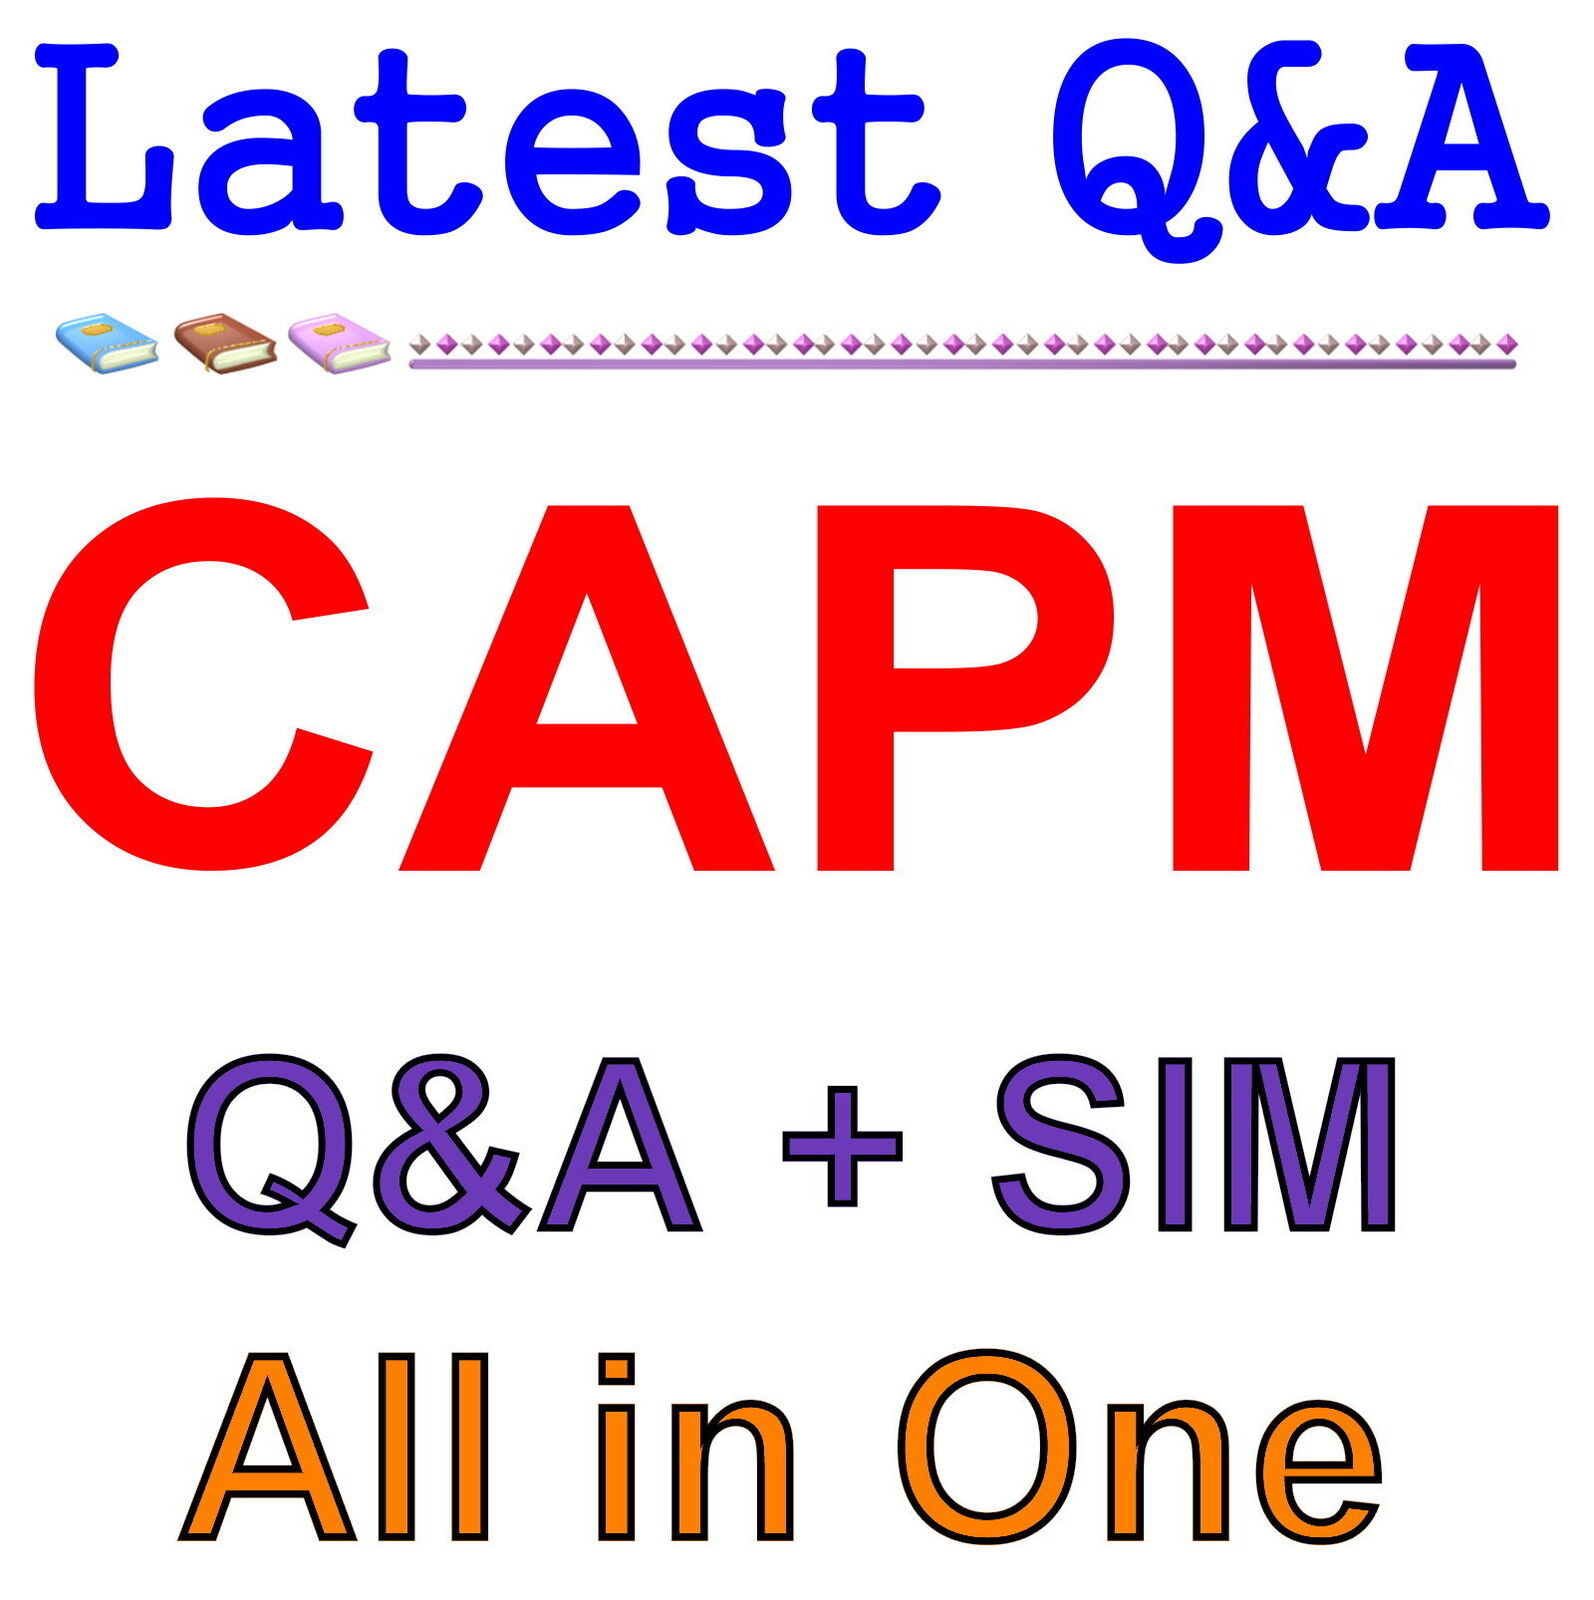 Certified Associate in Project Management CAPM Exam Q&A+SIM